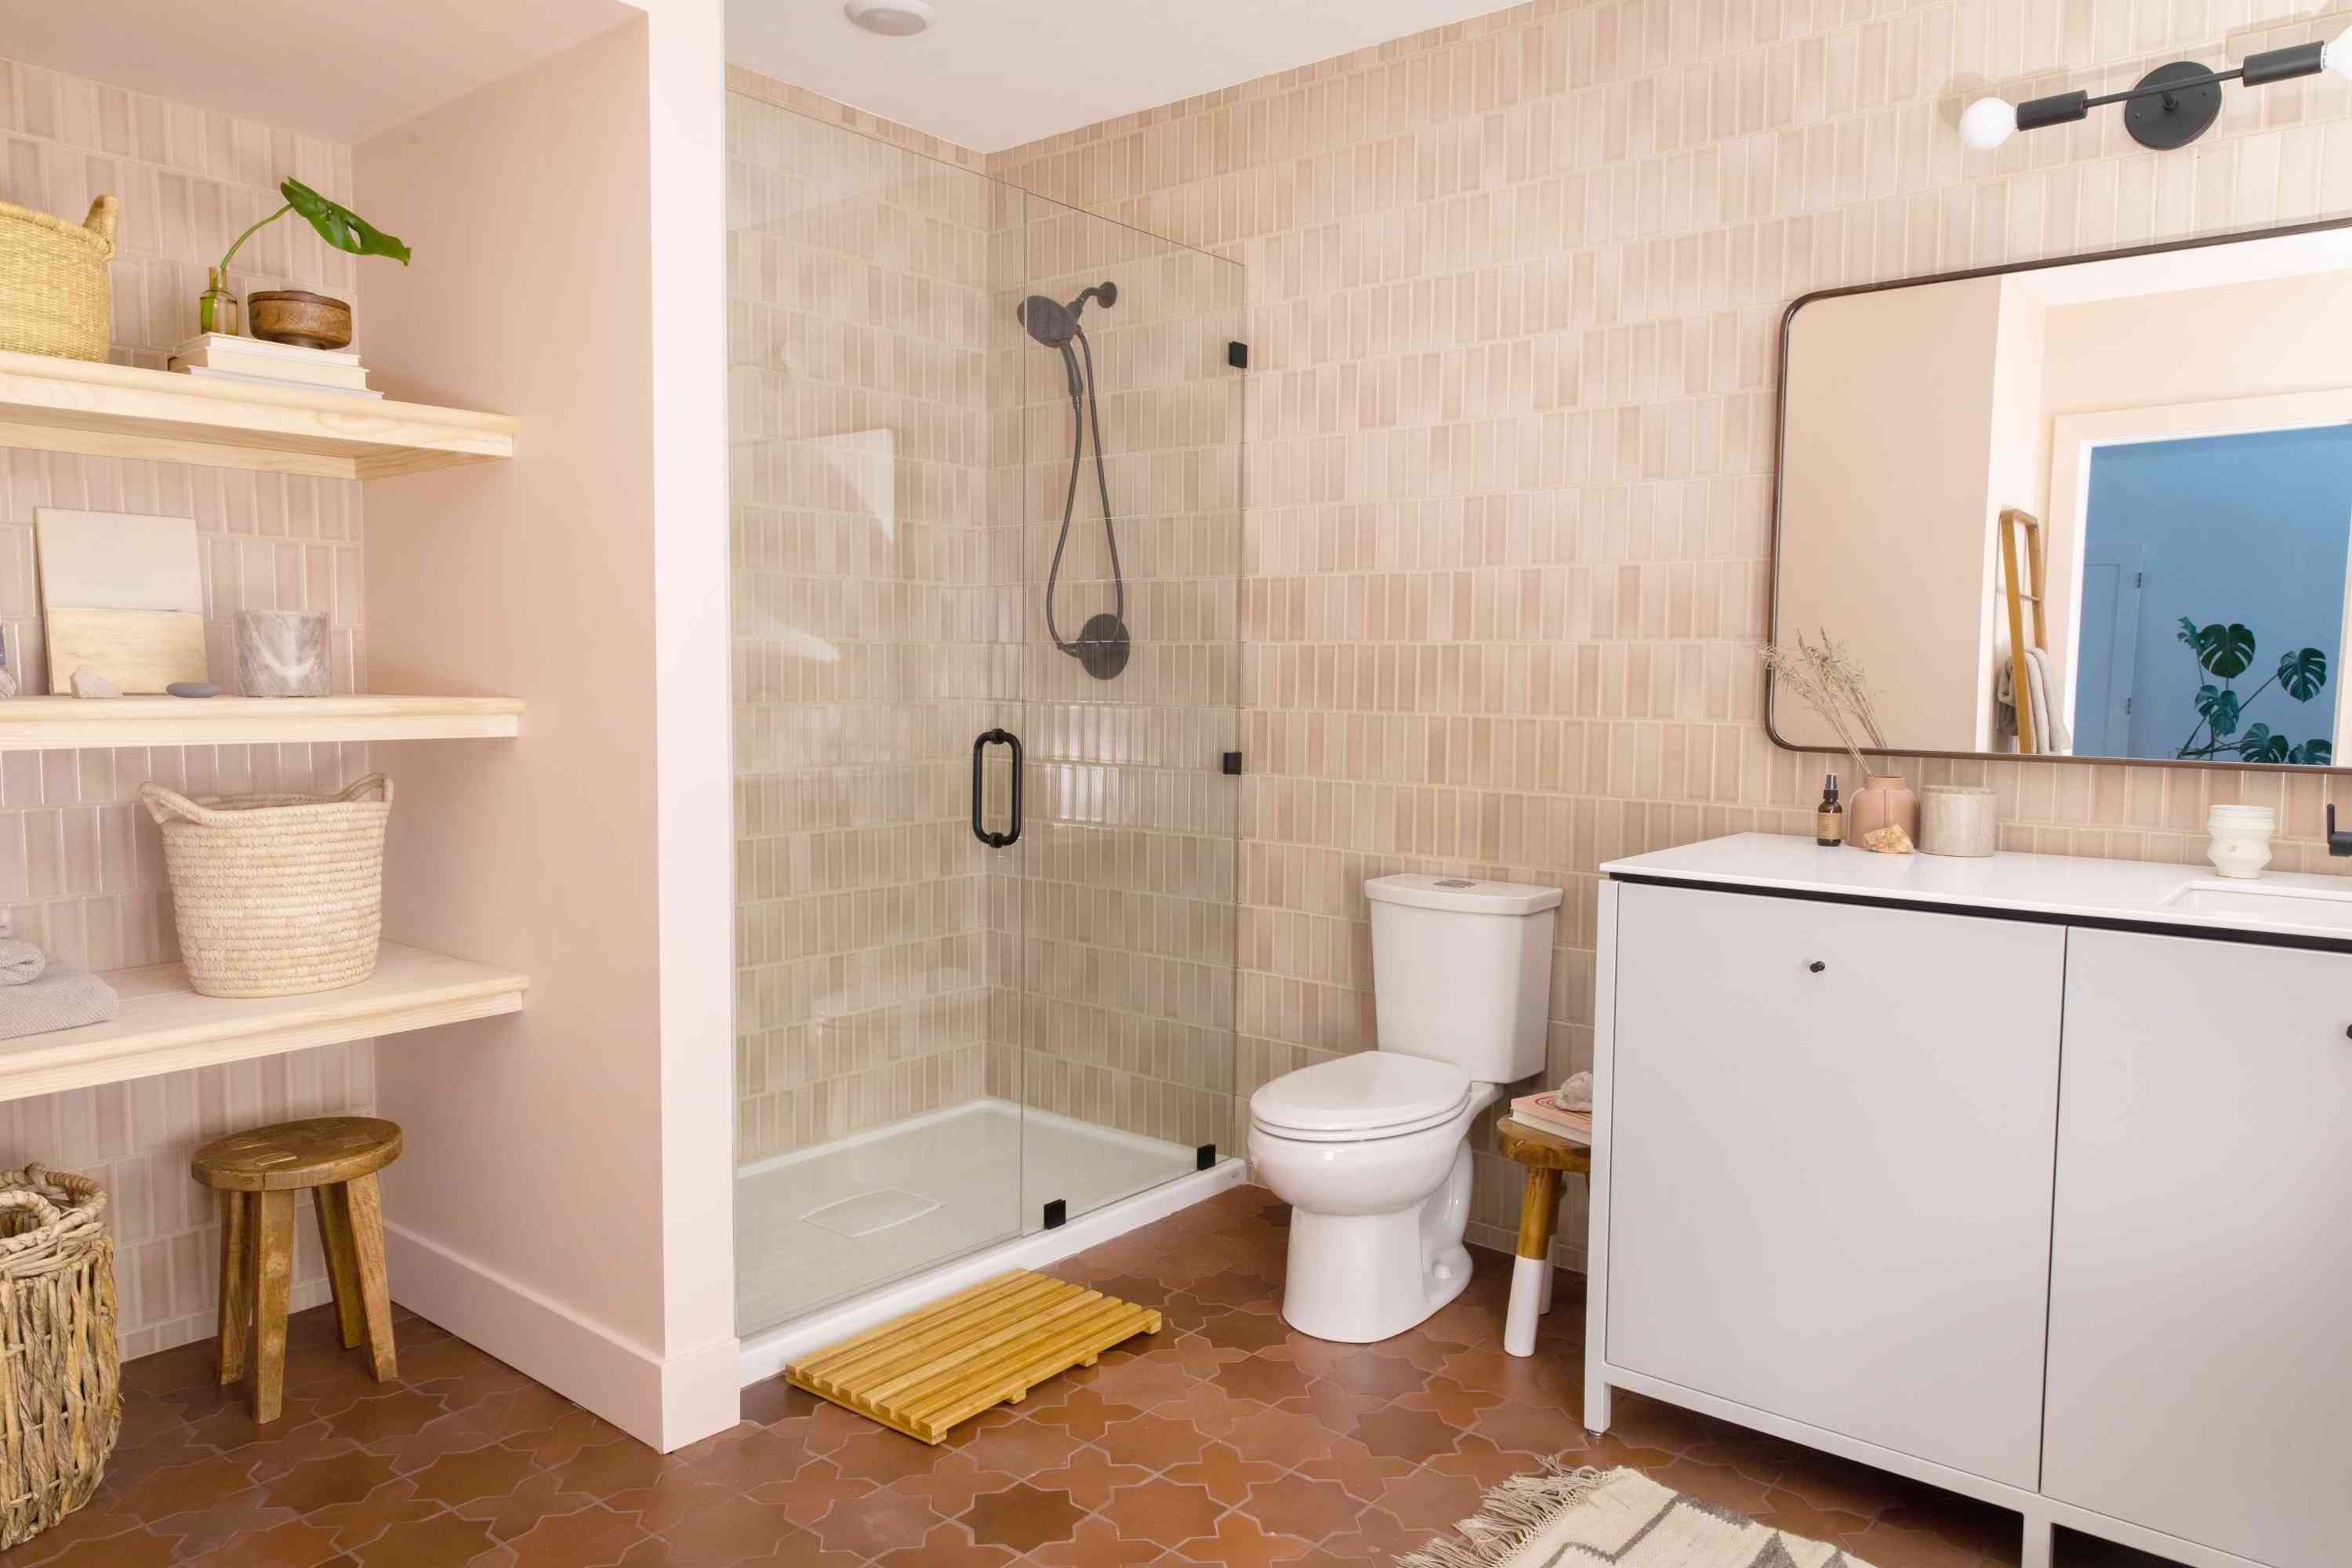 Basement Bathroom Installation Guide